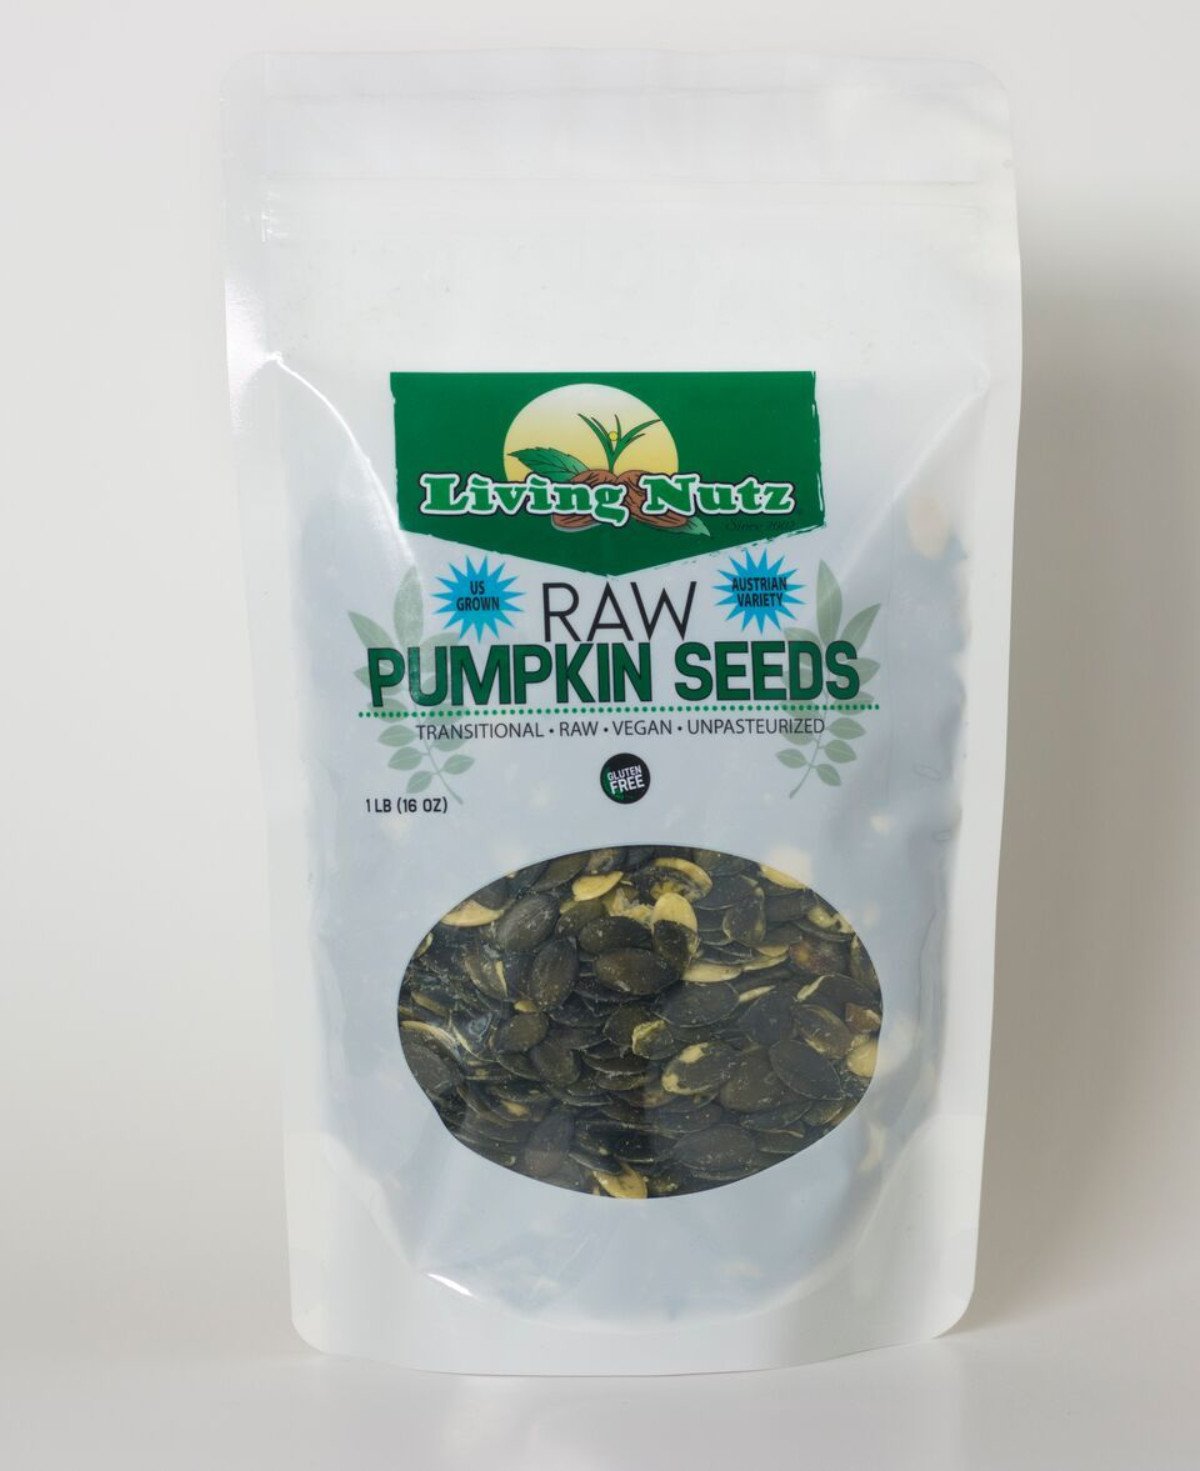 raw pumpkin seeds grown in the US. 